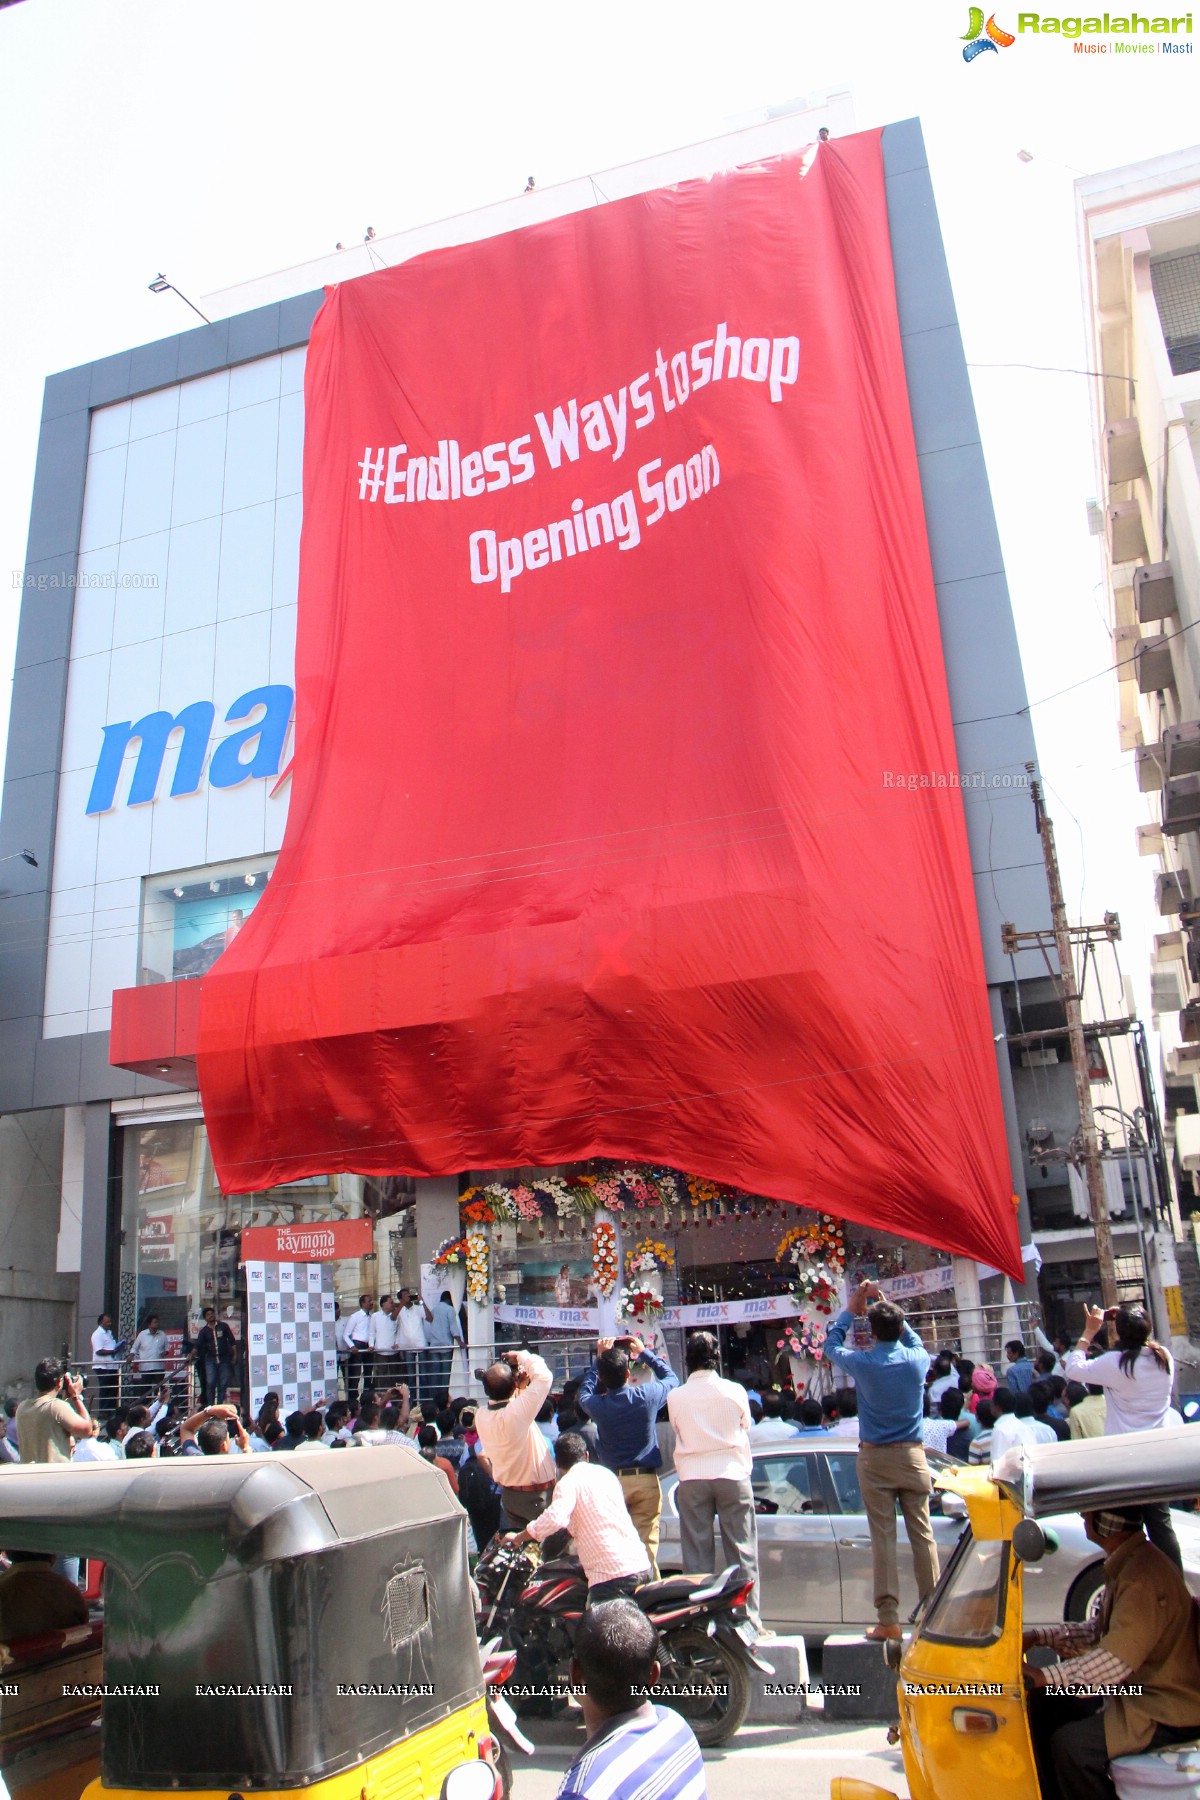 Max Fashion Store Launch at Geetha Nagar, in Malkajgiri